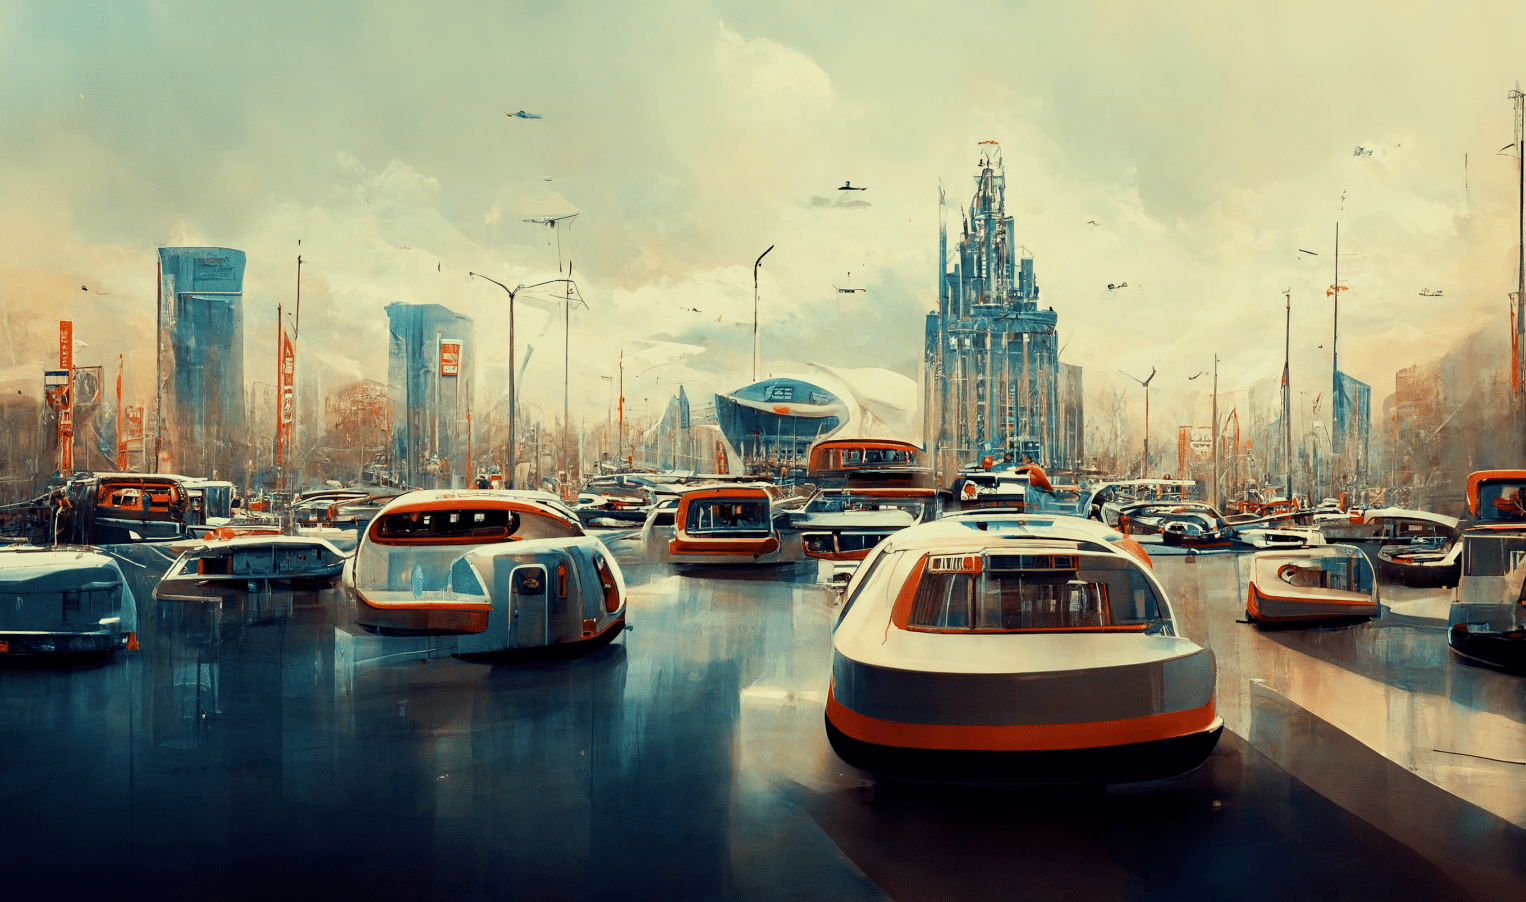 Image showing self-driving cars in a futuristic city illustrates automotive AI.